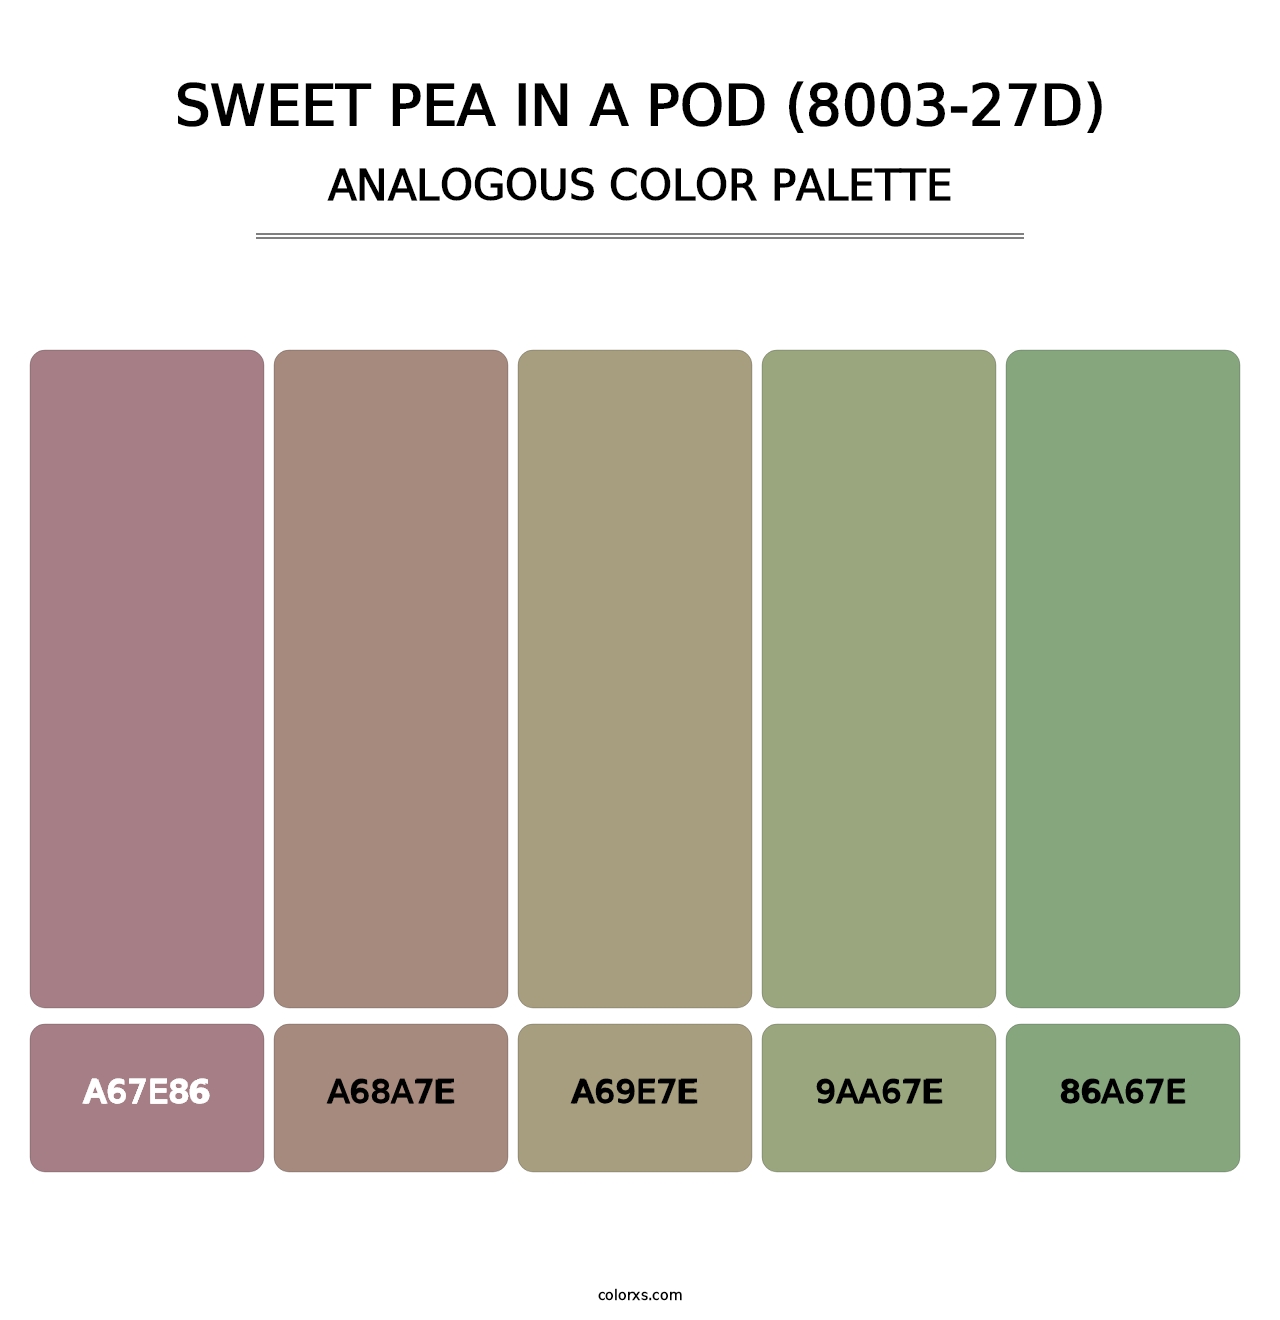 Sweet Pea in a Pod (8003-27D) - Analogous Color Palette